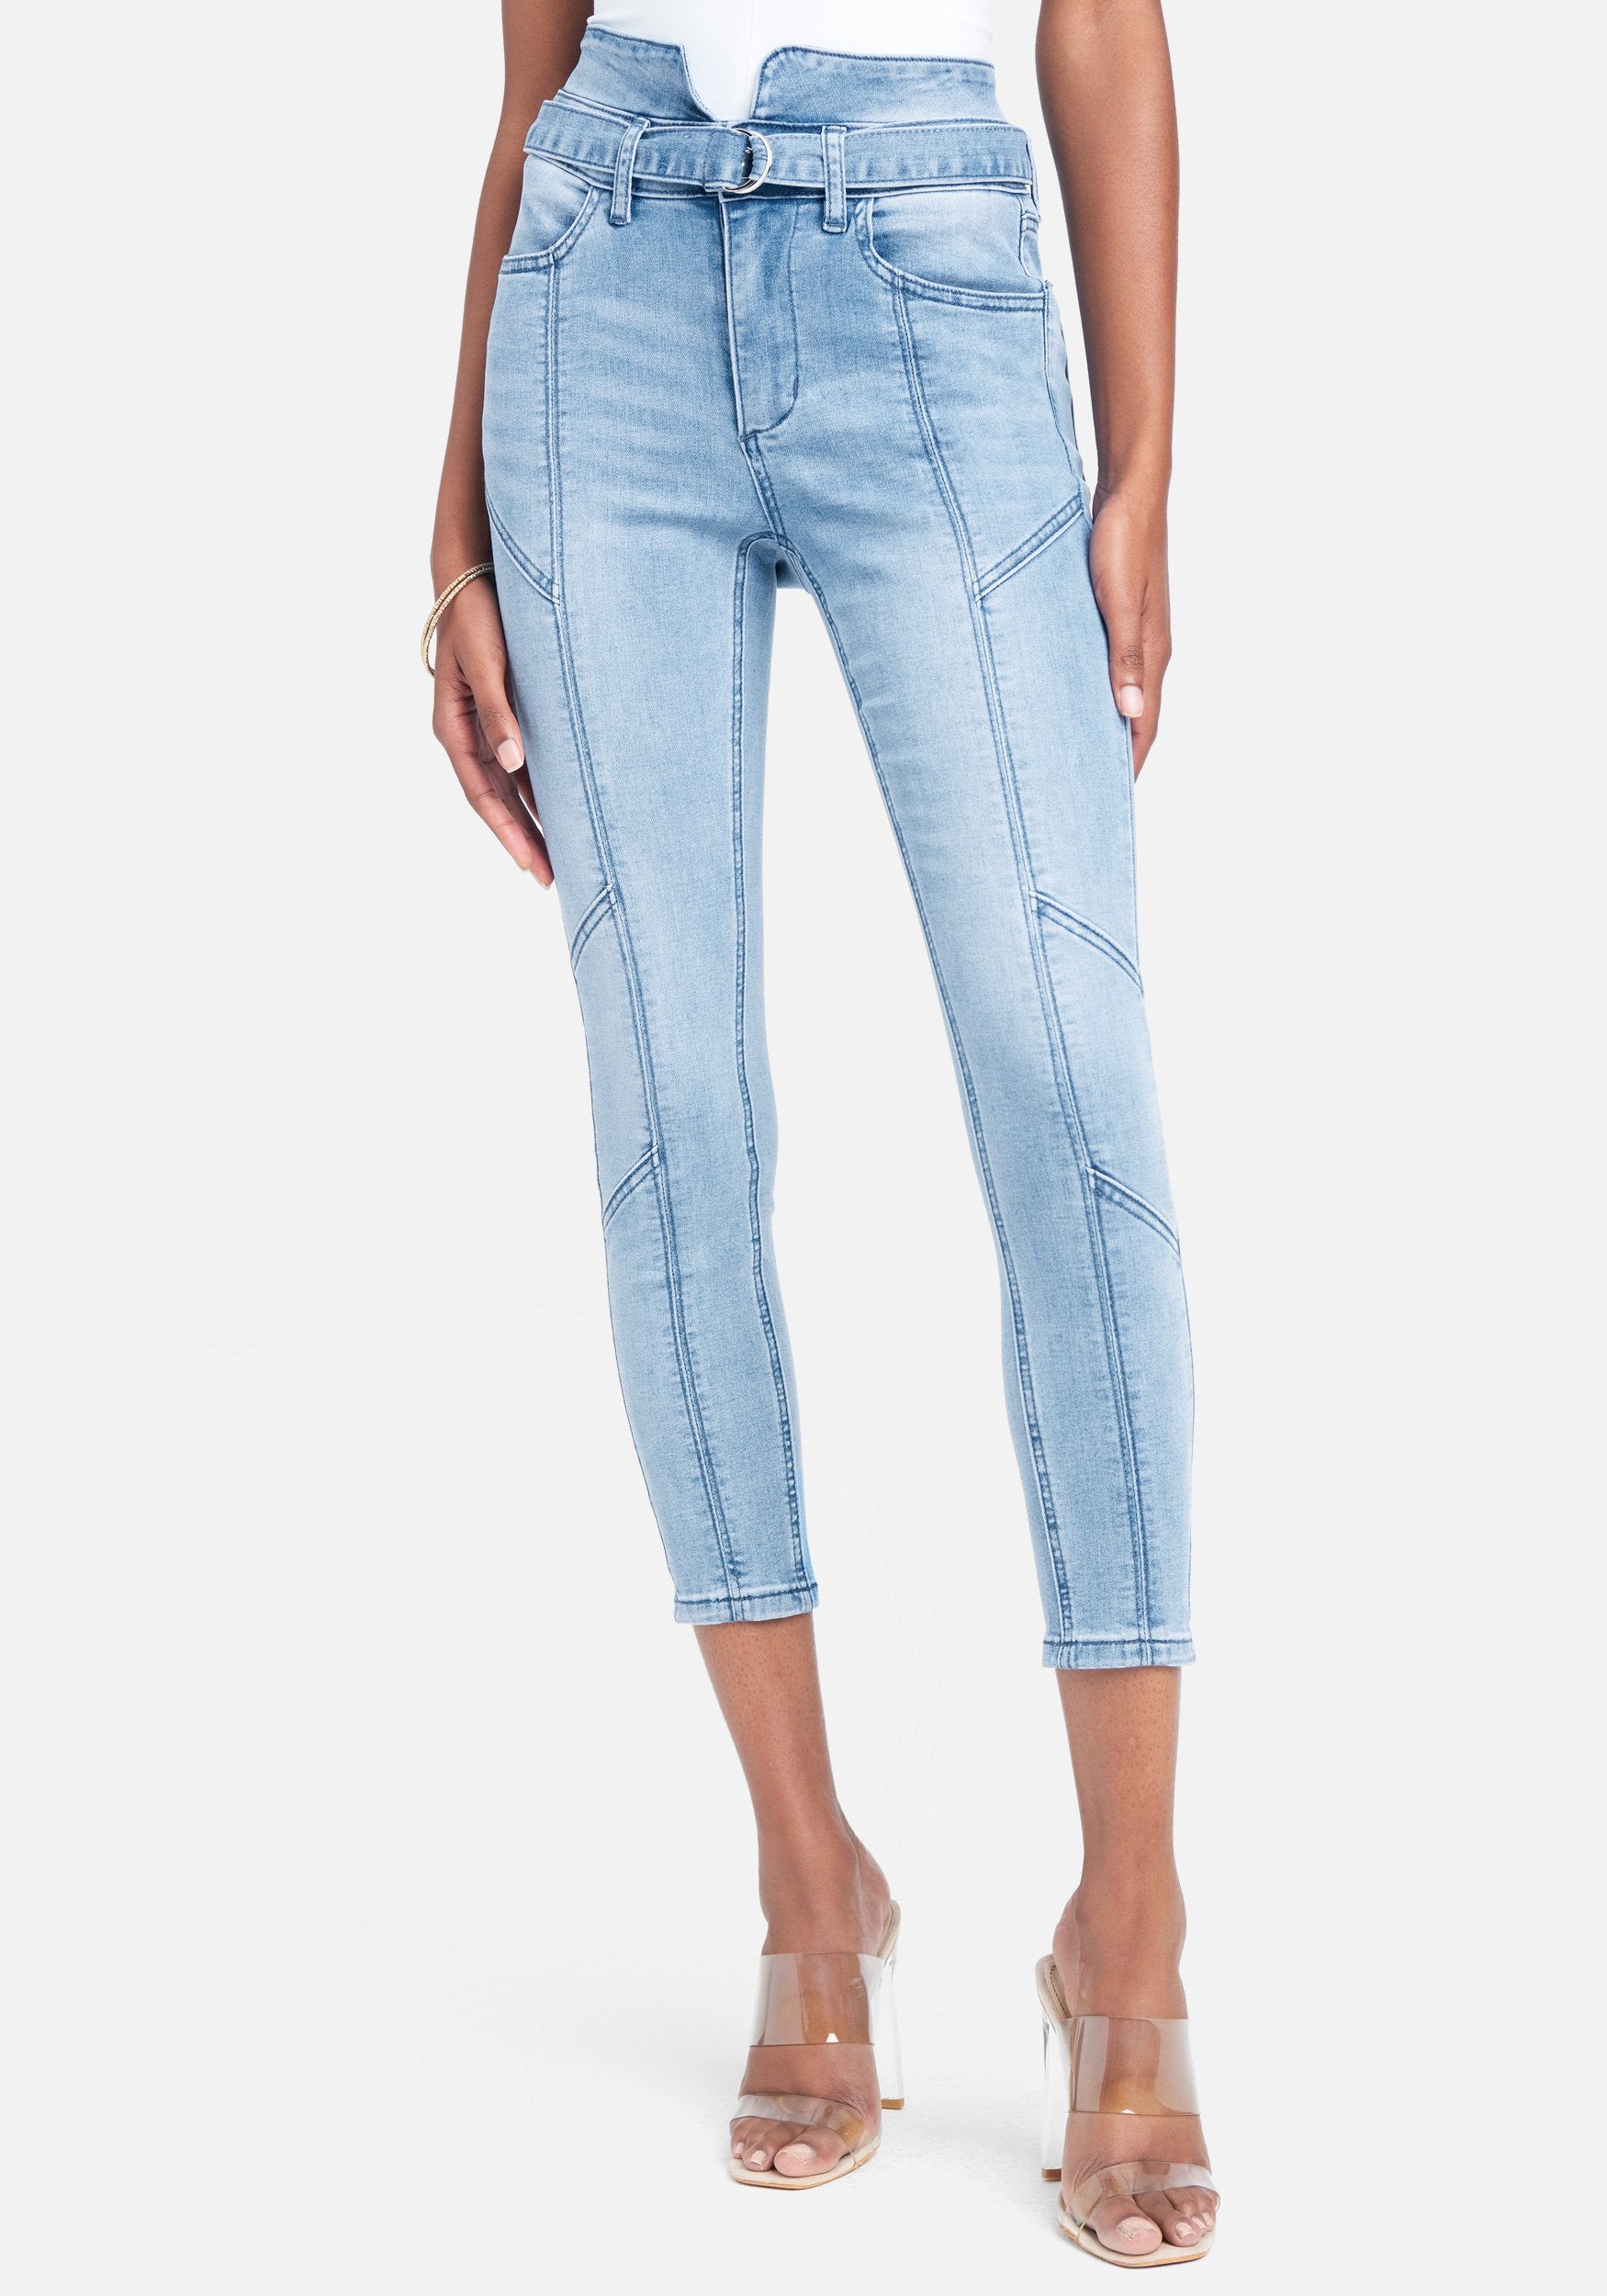 Bebe Women's High Waist Belted Waist Skinny Jeans, Size 26 in Medium Blue Wash Cotton/Spandex